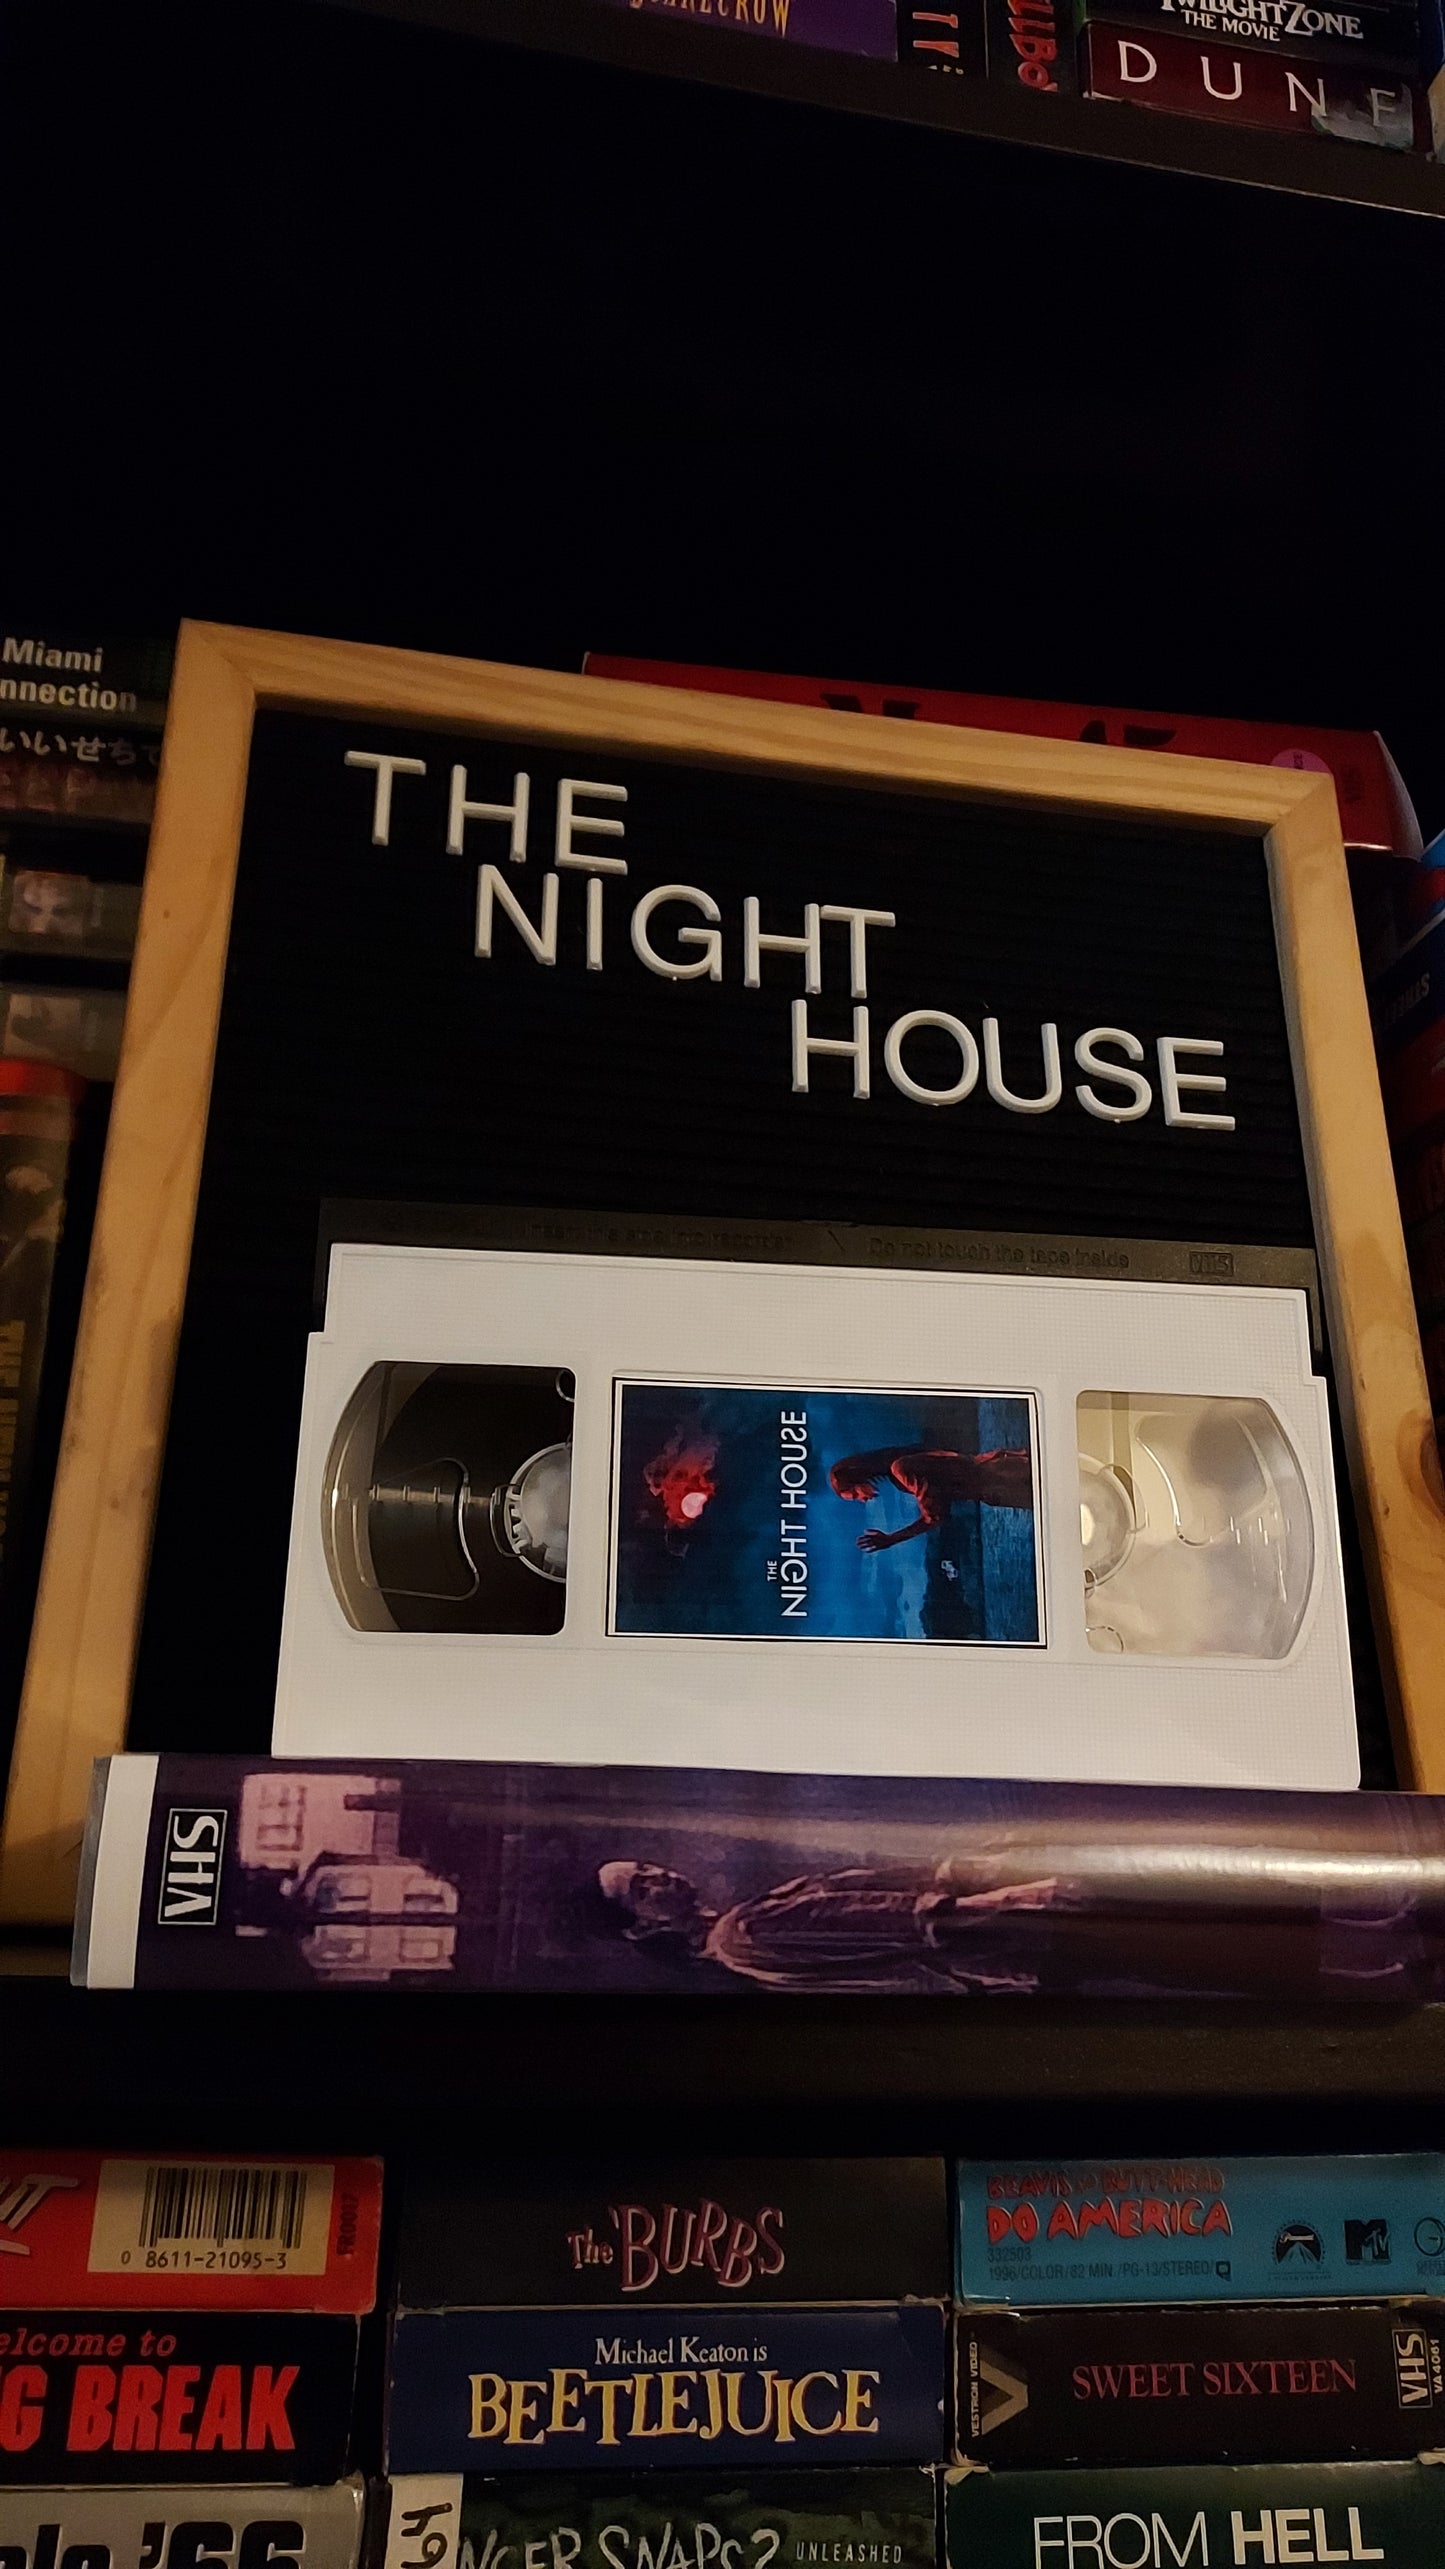 The Night House Artpiece VHS